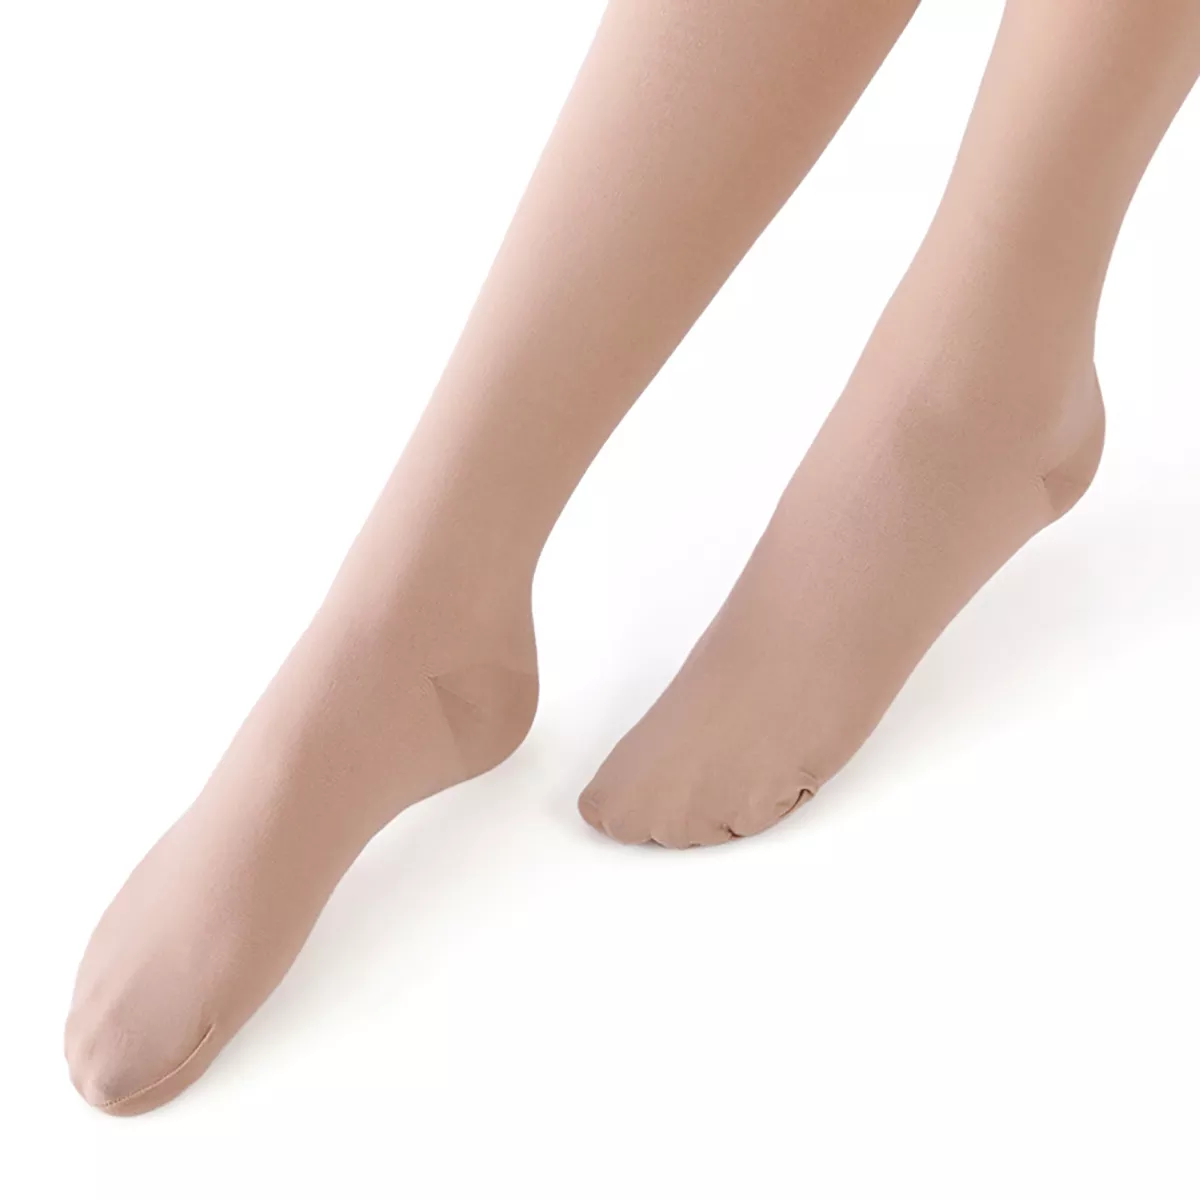 Varcoh ® 40-50 mmHg Women Knee High Closed Toe Compression Socks Beige